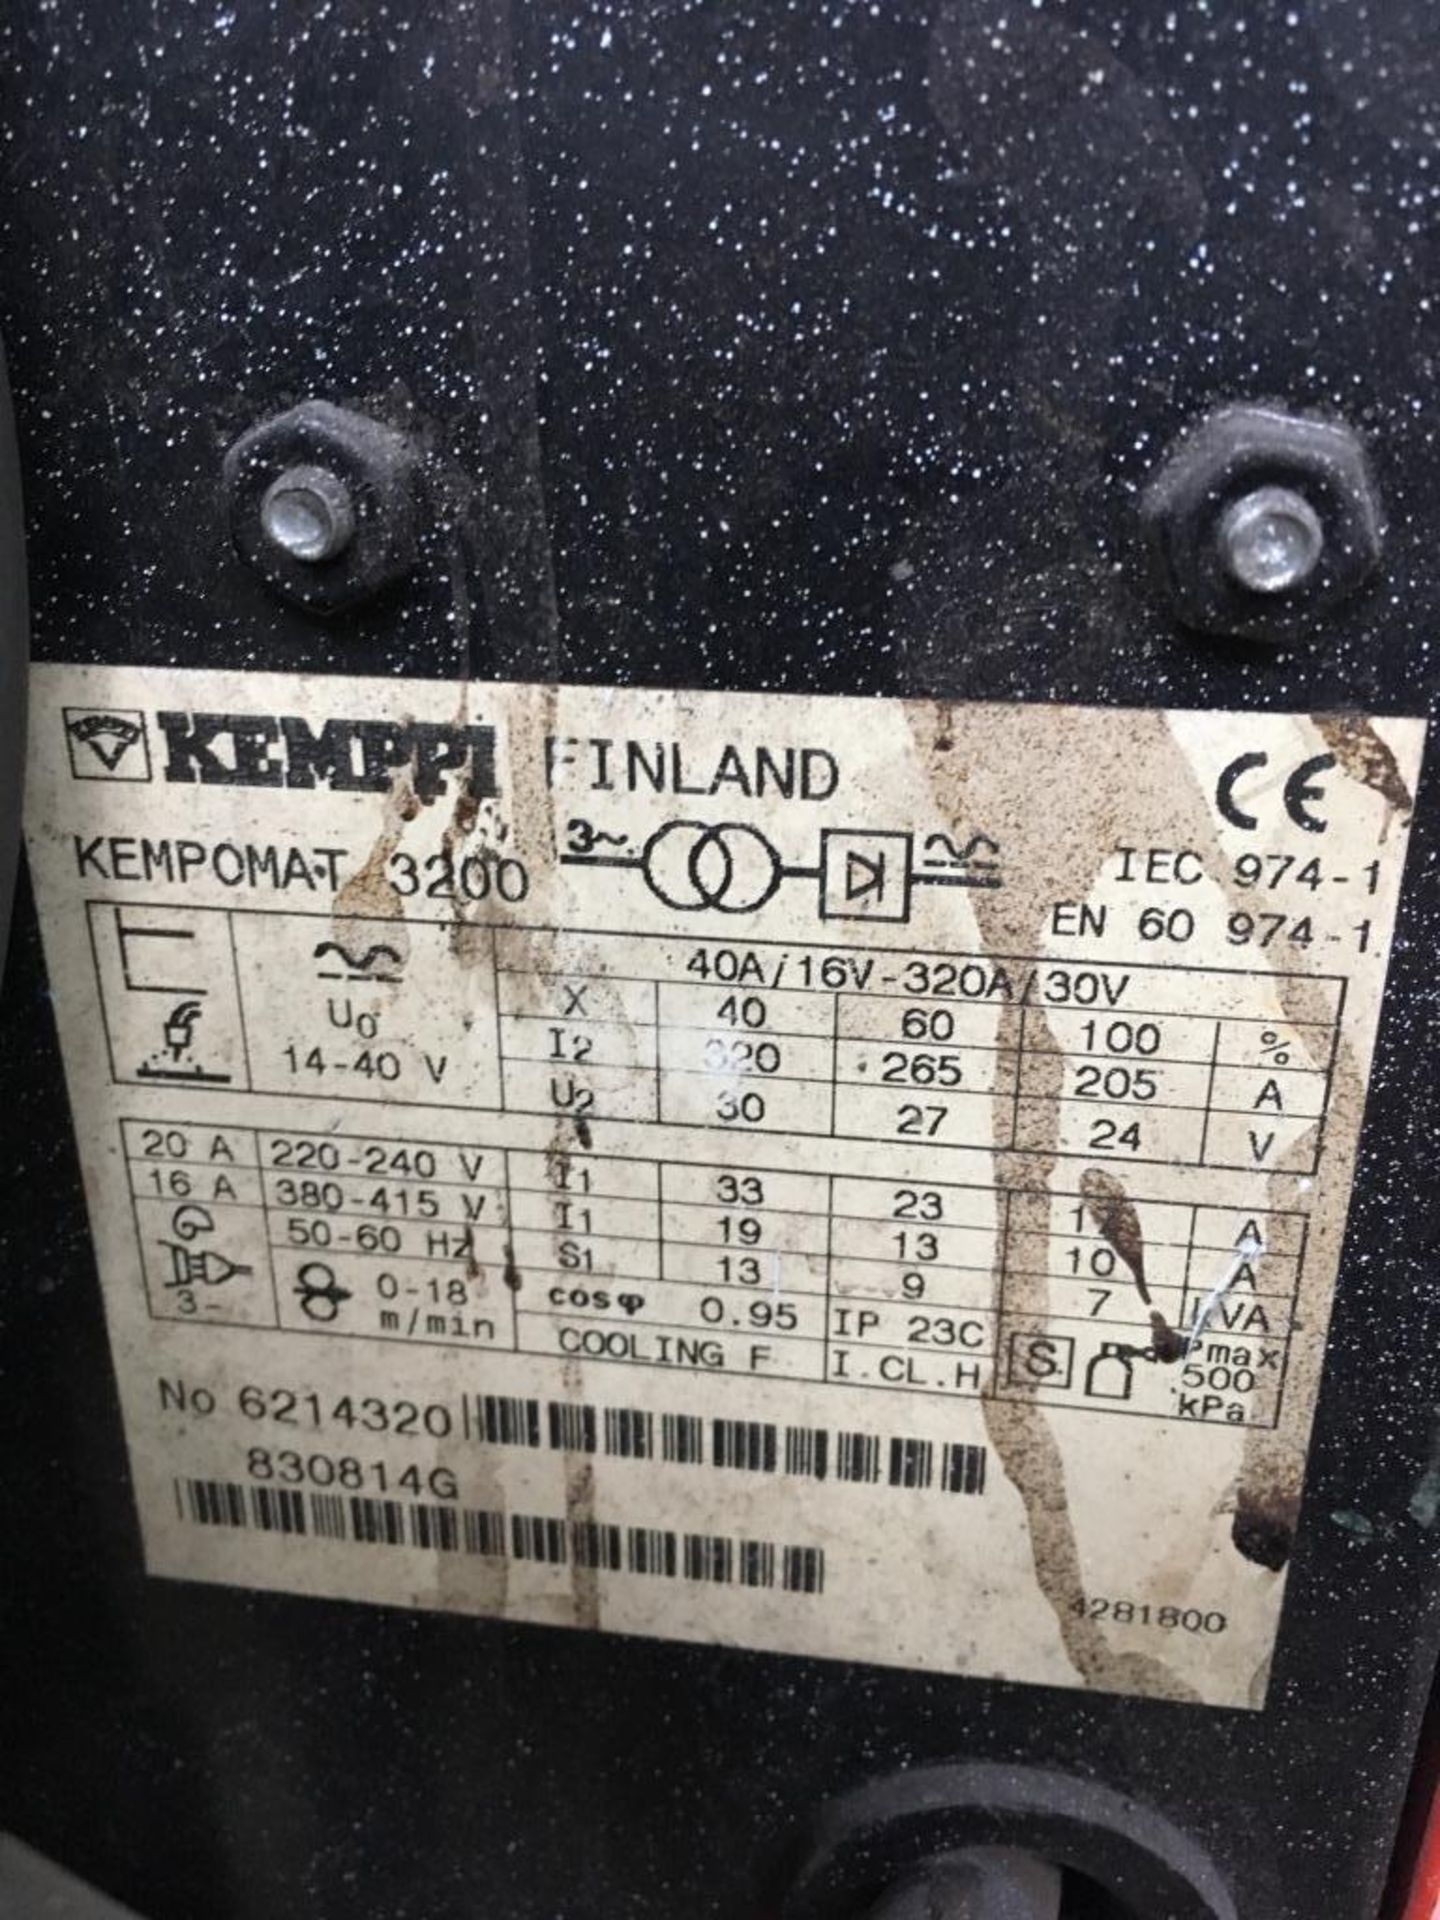 Kemppi Kempo mat 3200 mig welder - Image 5 of 6